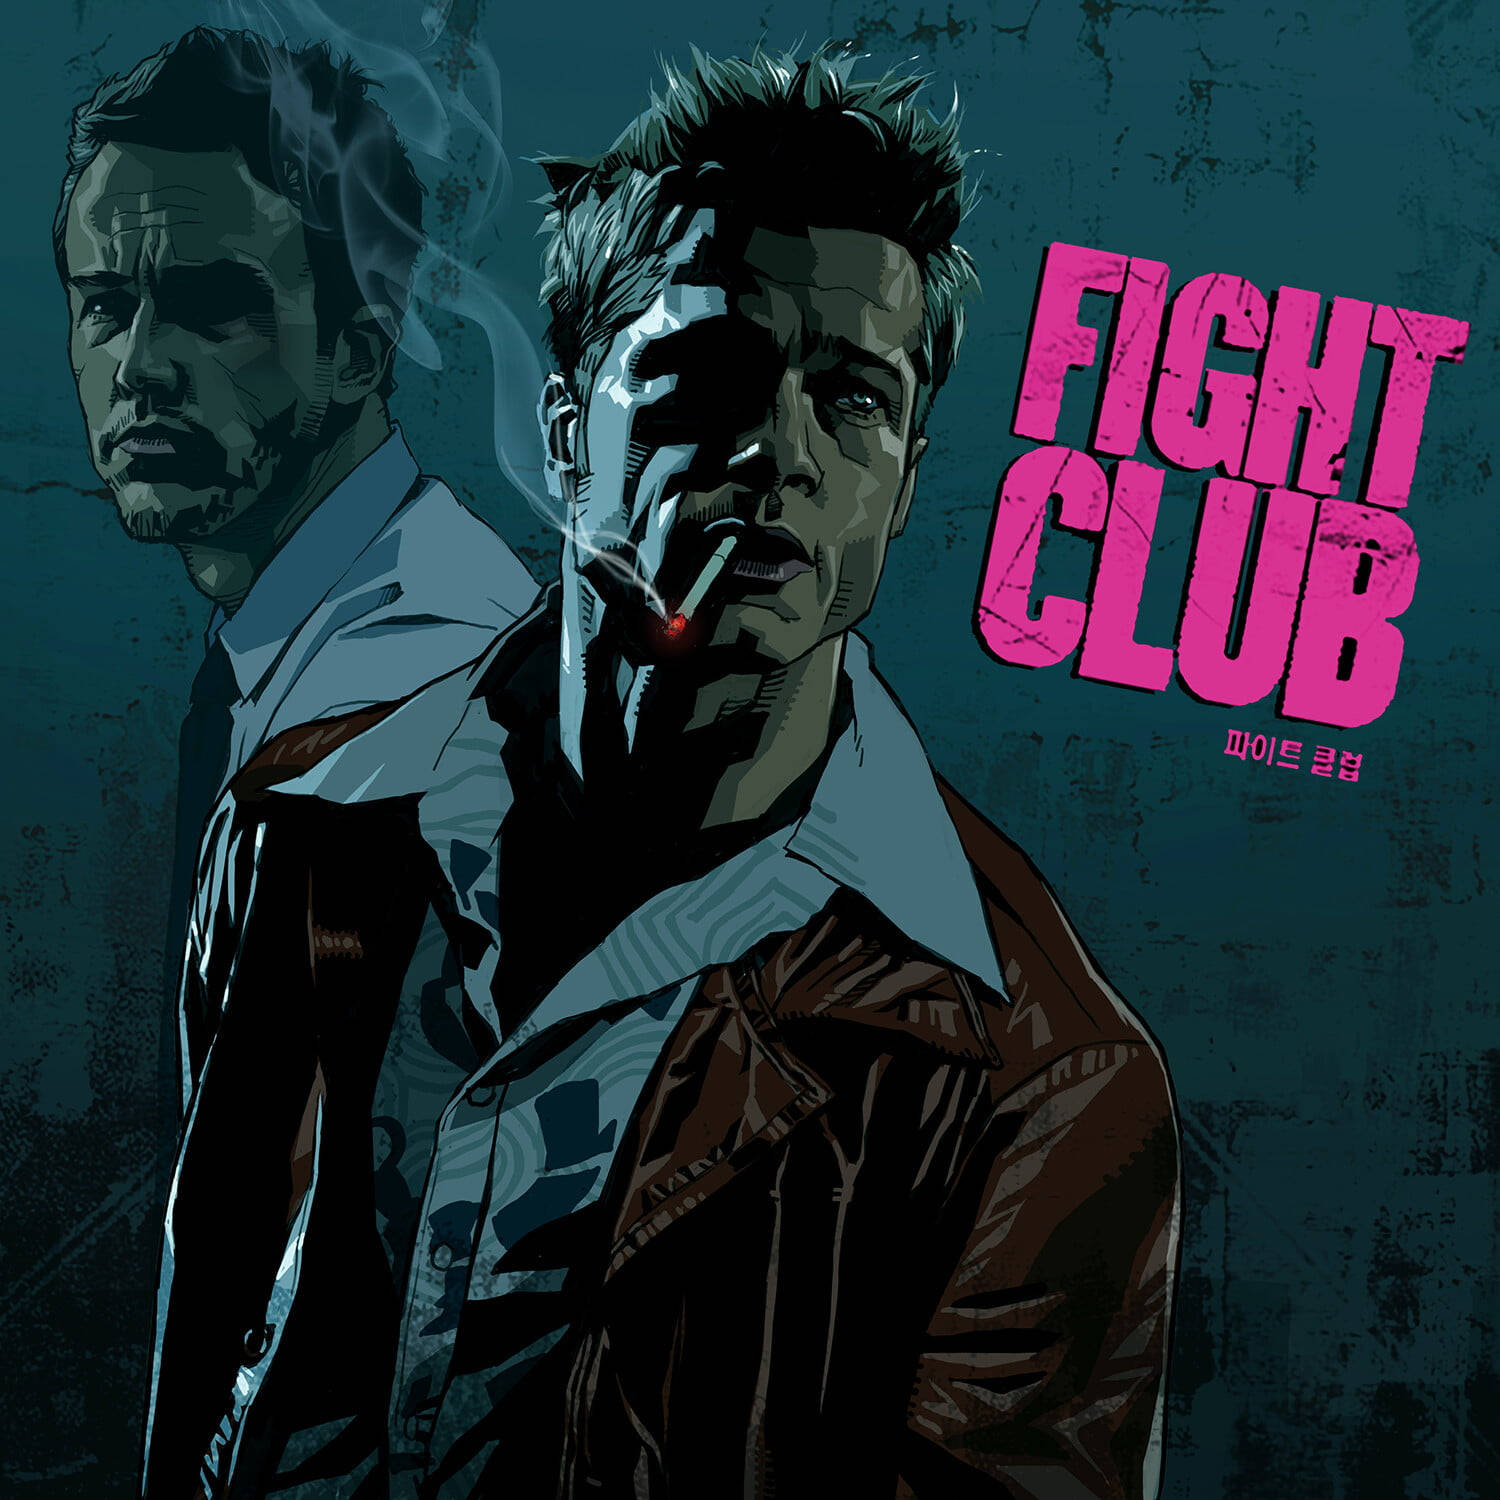 Free Fight Club Wallpaper Downloads, Fight Club Wallpaper for FREE